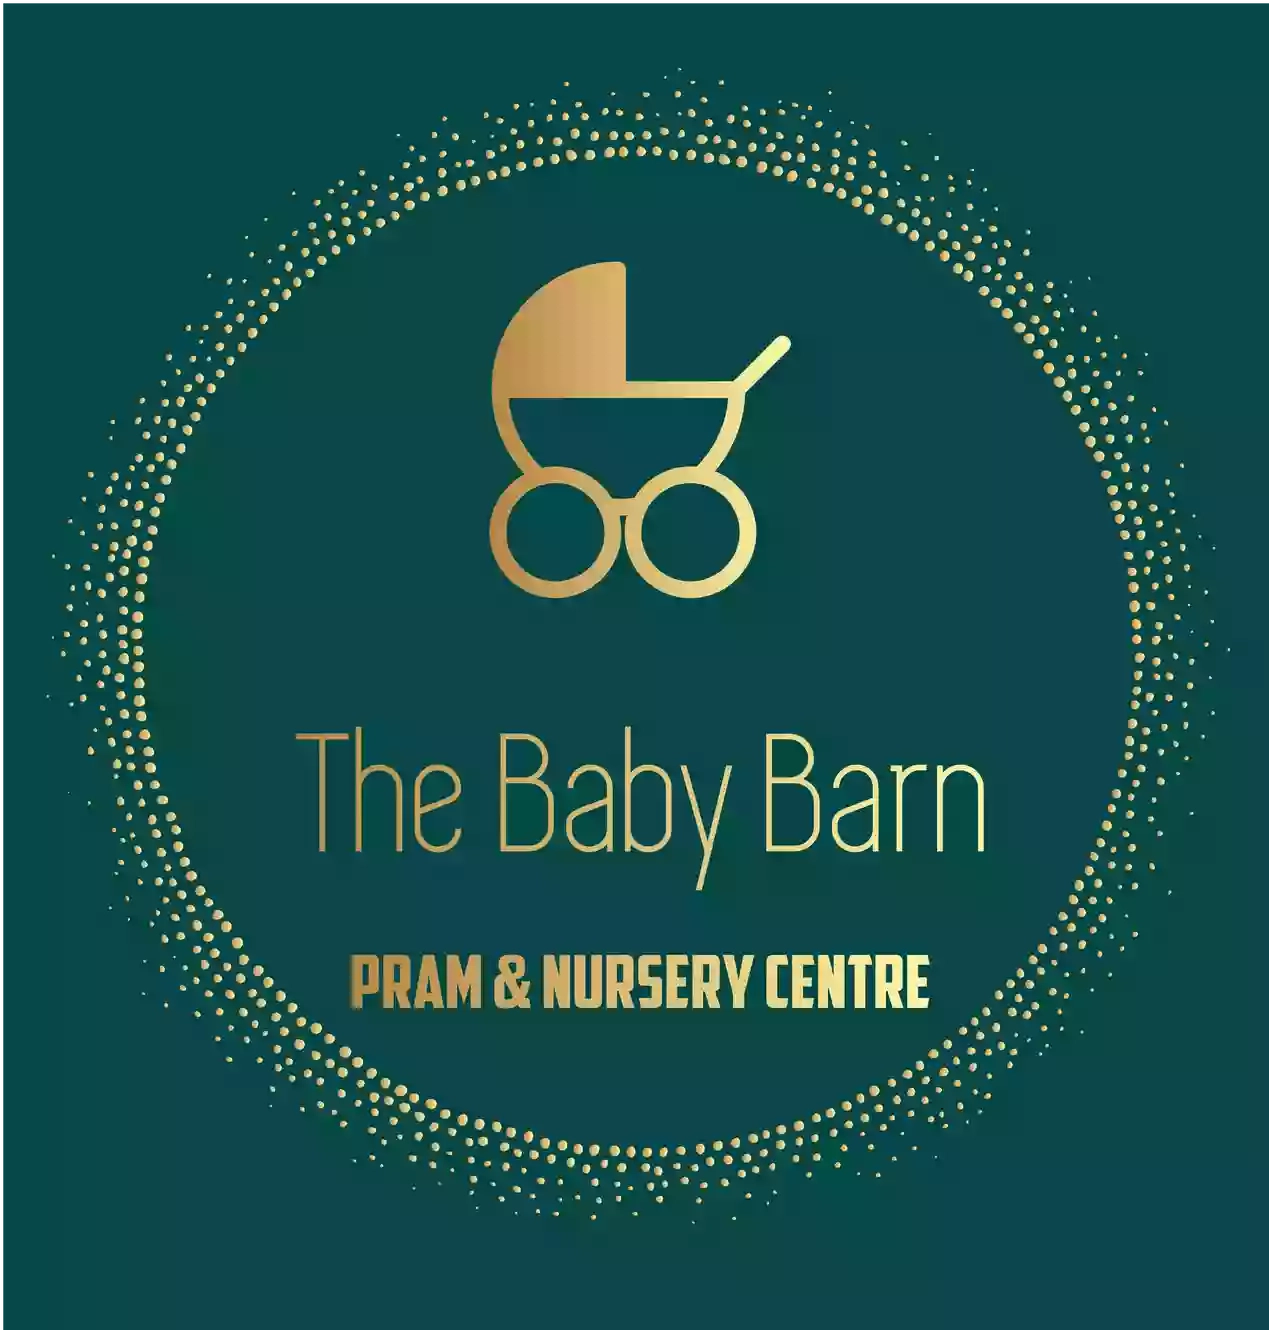 The Baby Barn Pram and Nursery Centre